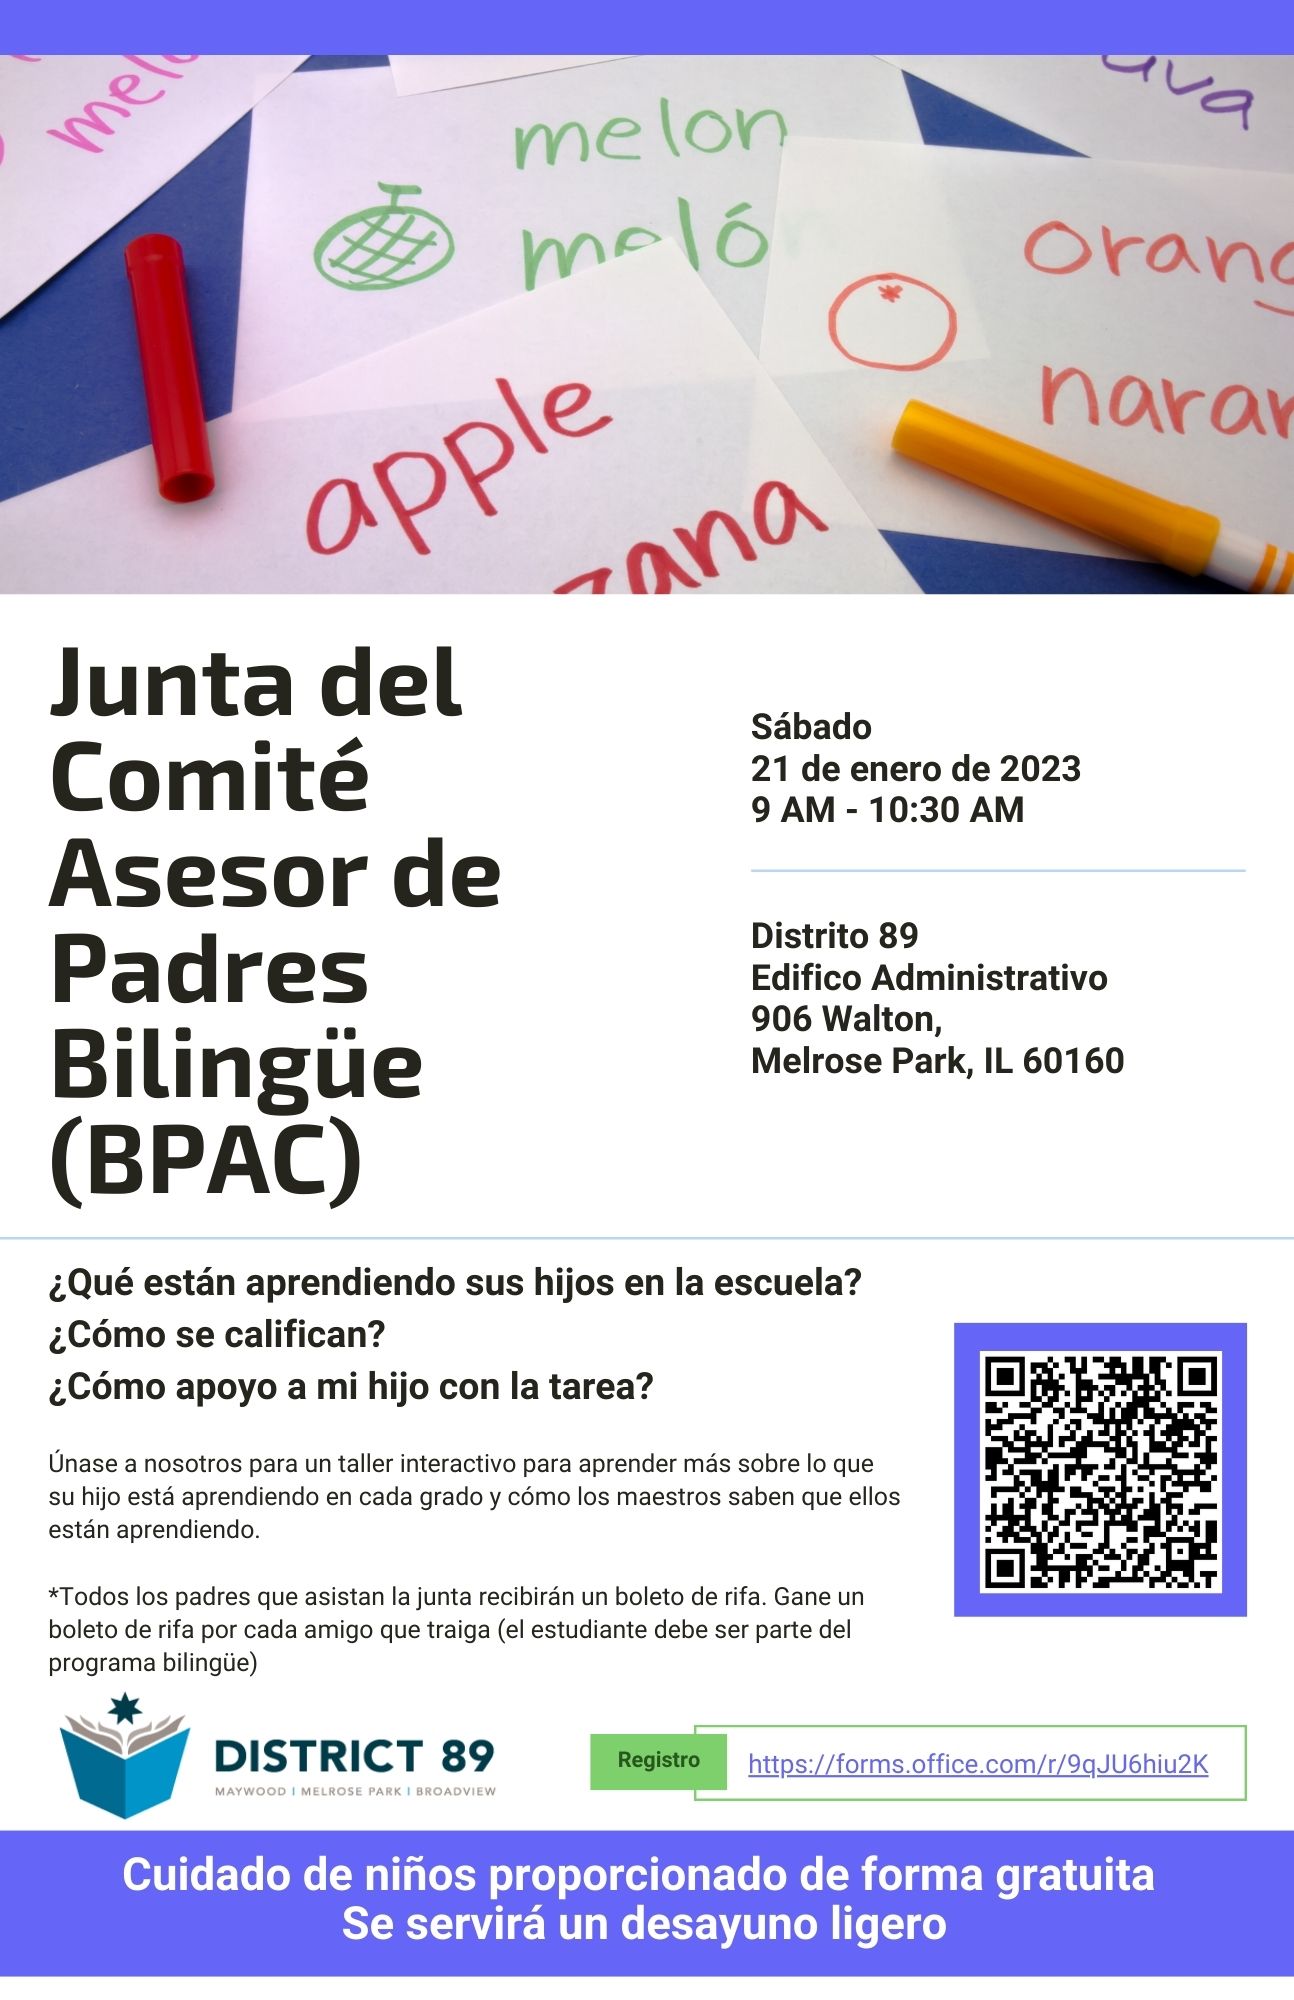 BPAC flyer in Spanish